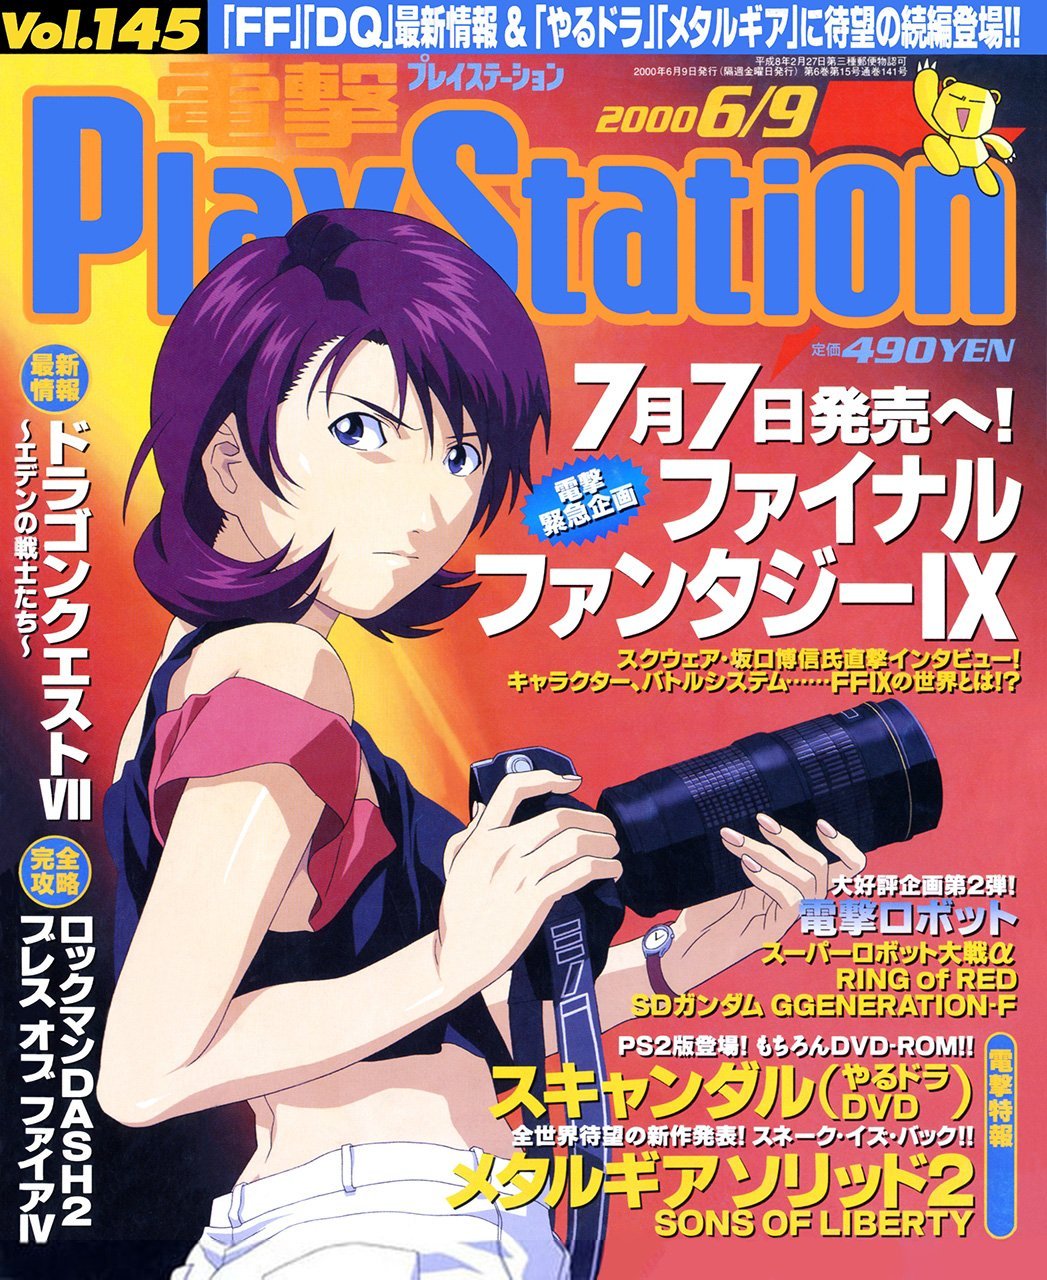 Dengeki PlayStation 145 (June 9, 2000)